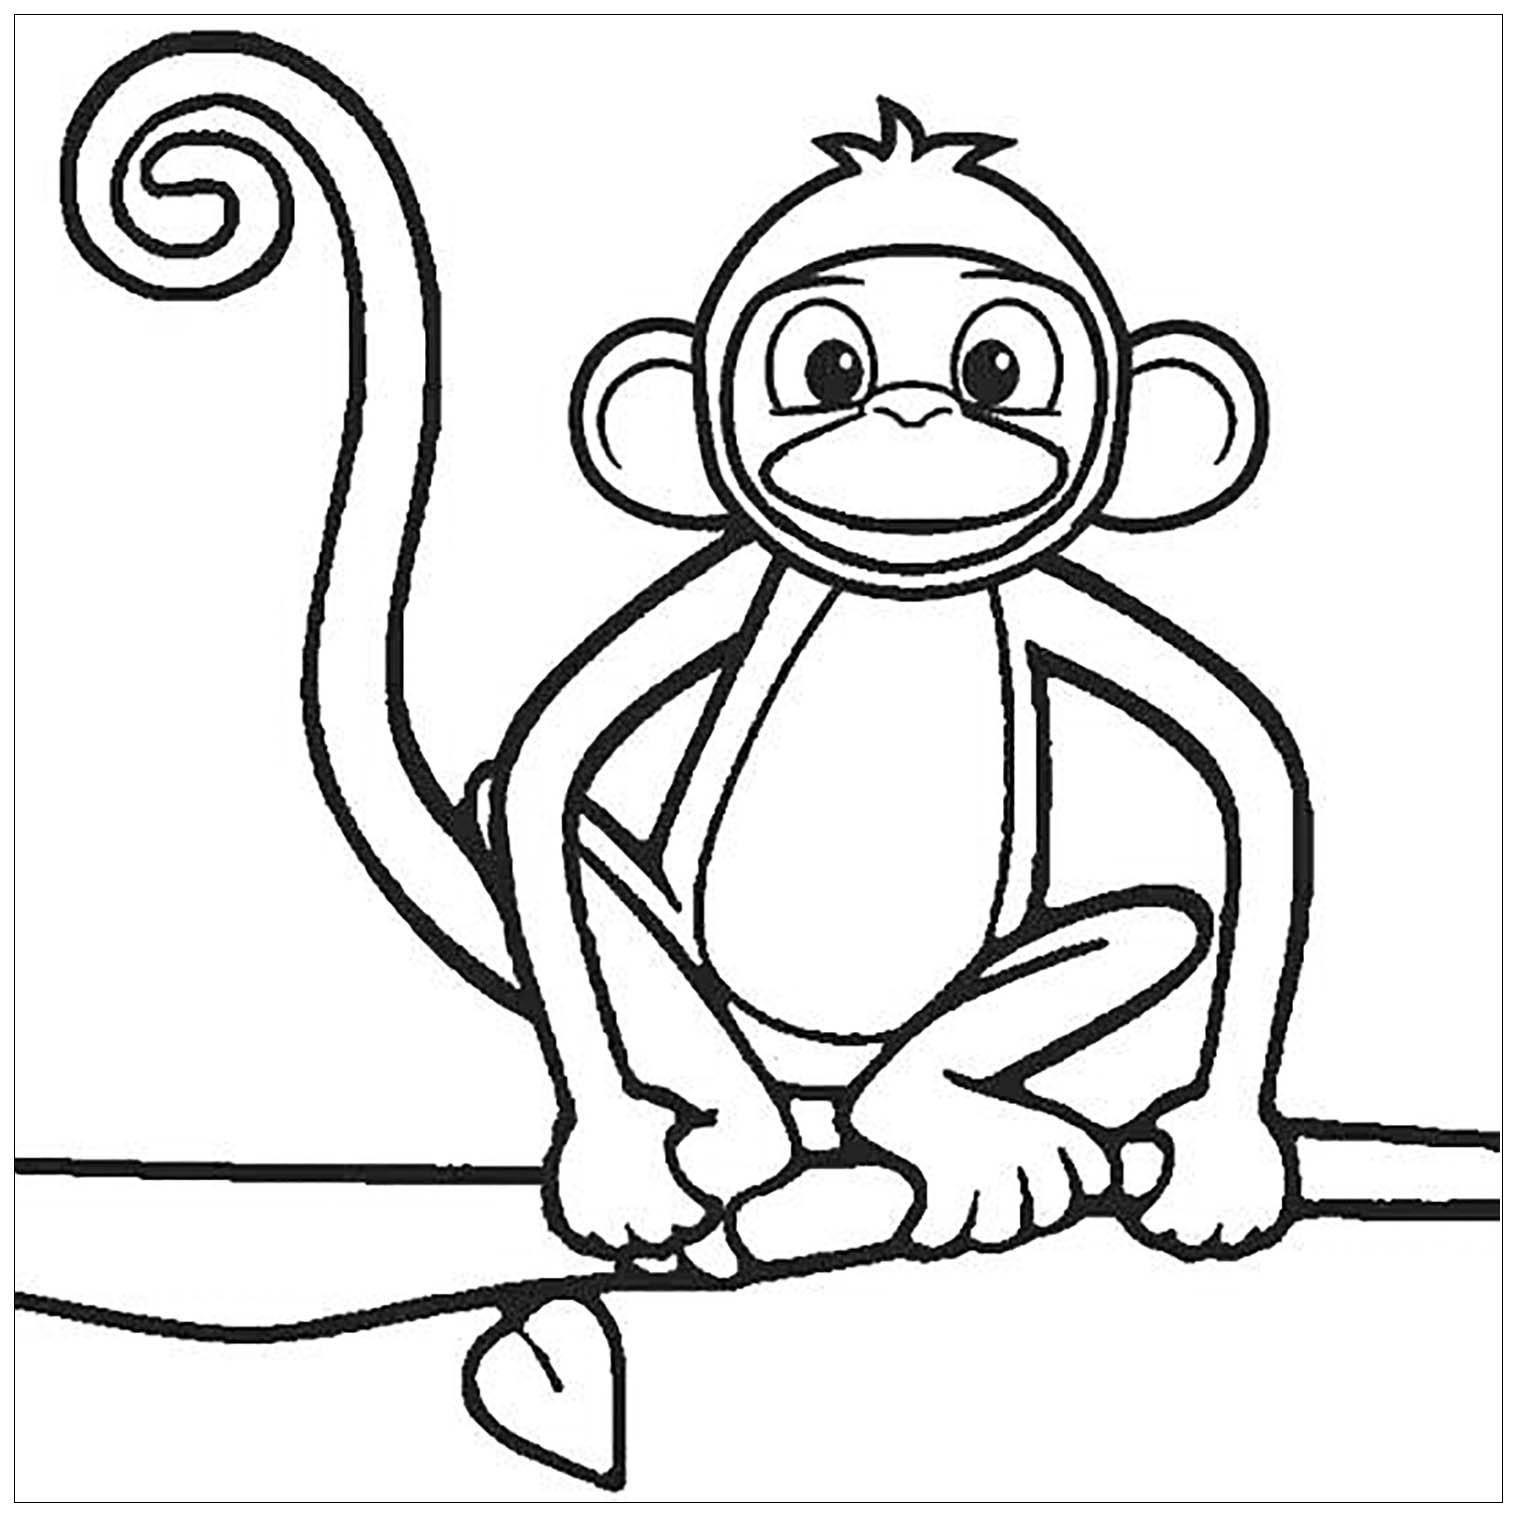 Download Monkeys to color for kids - Monkeys Kids Coloring Pages